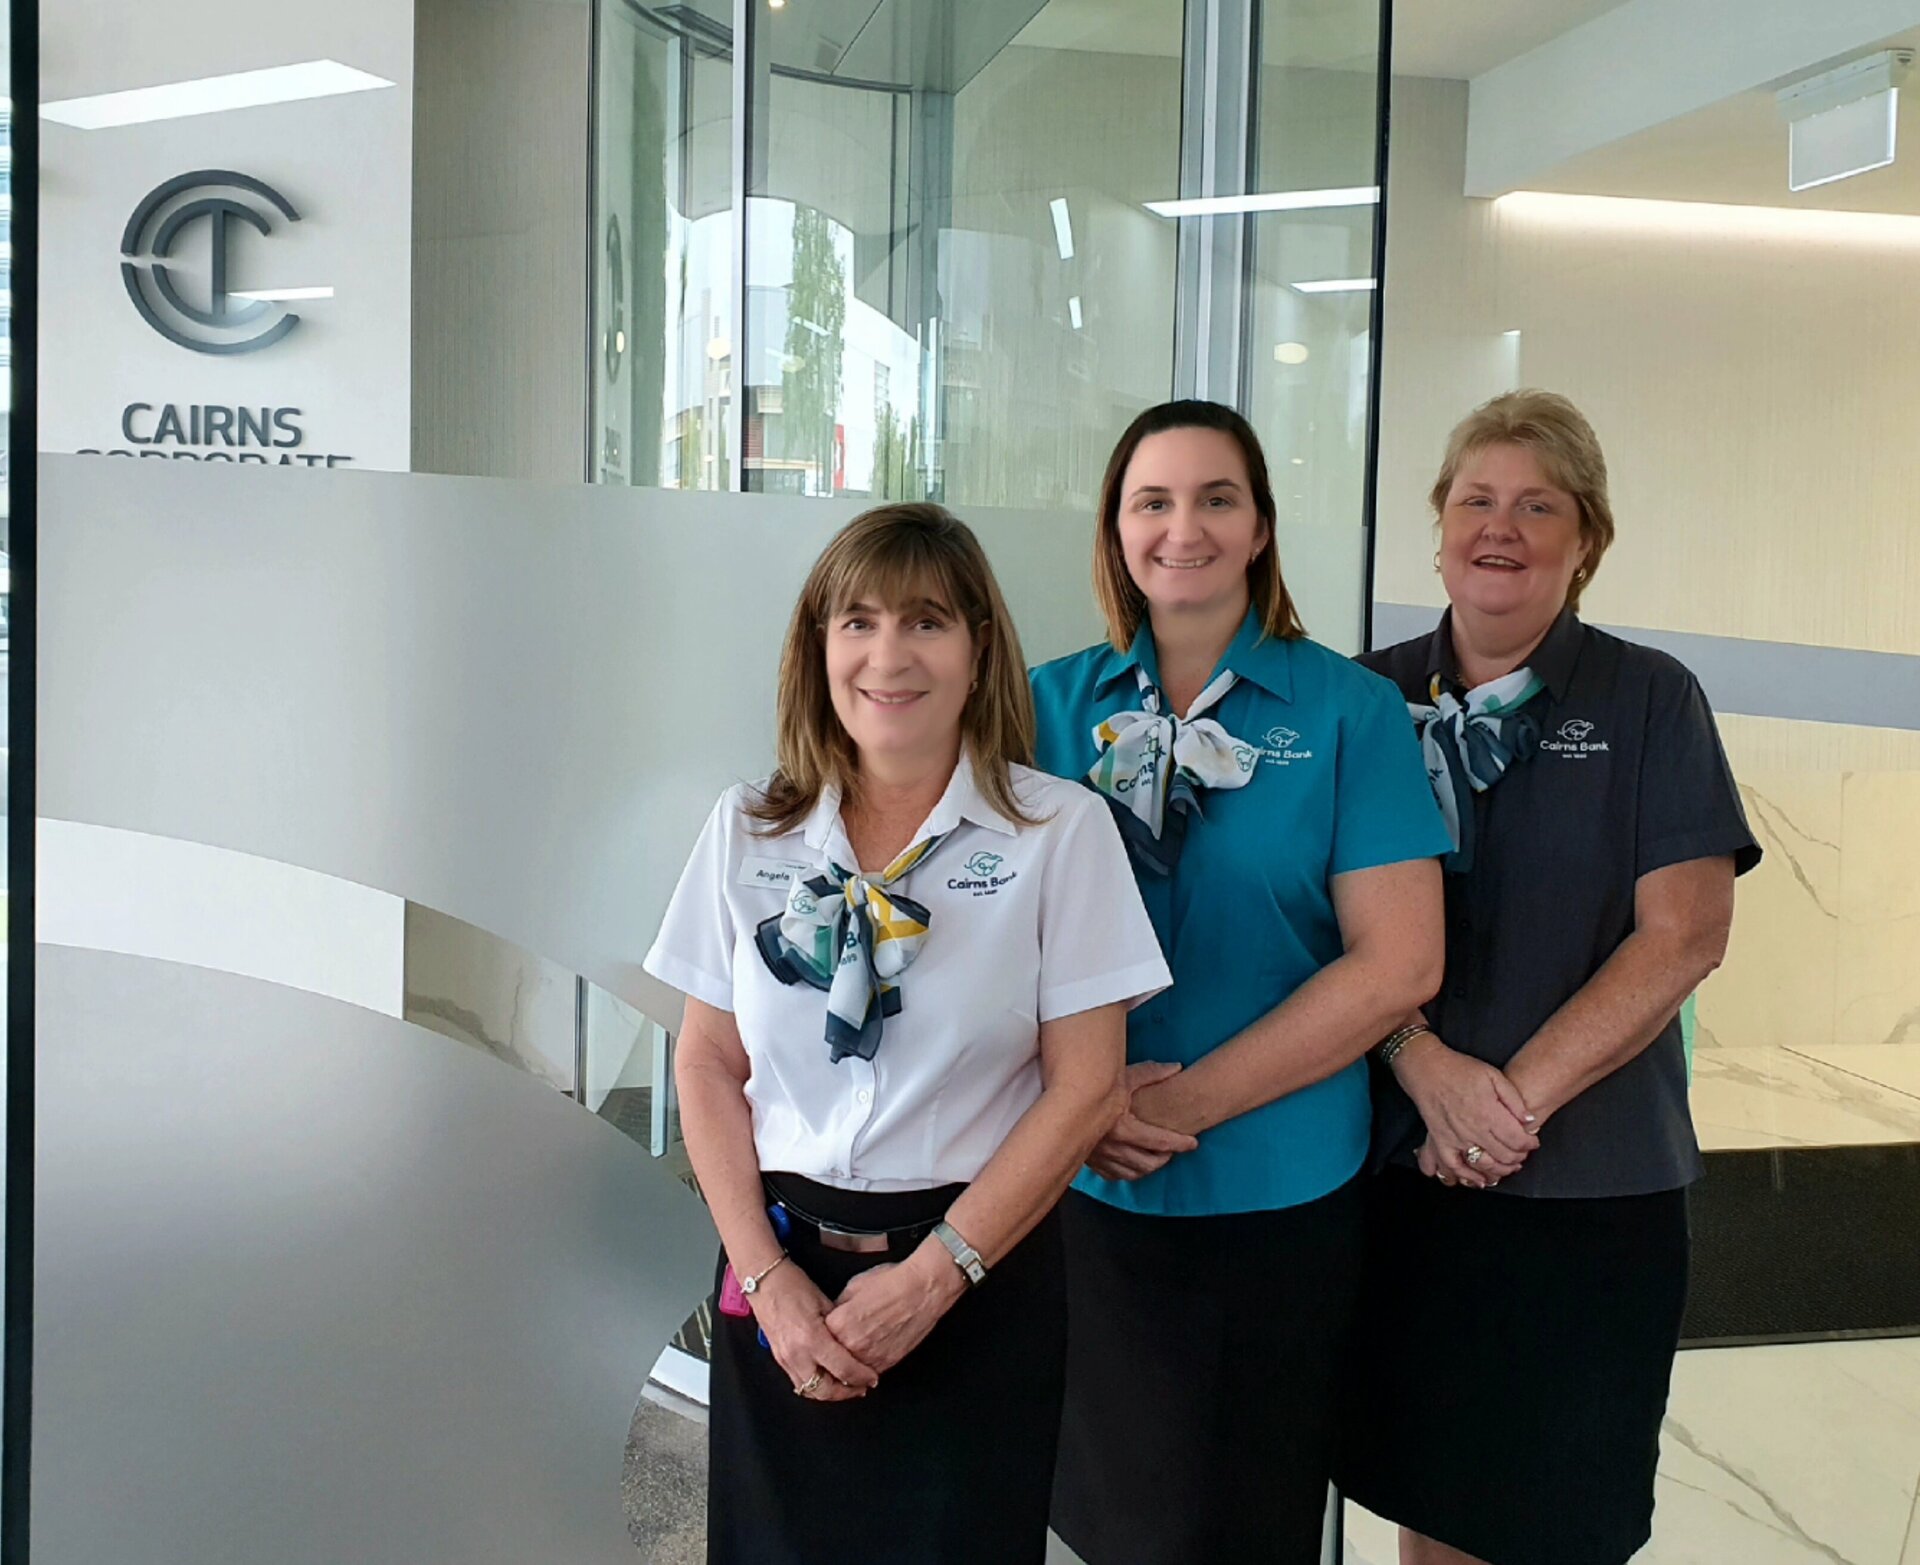 Cairns Bank Team posing in office